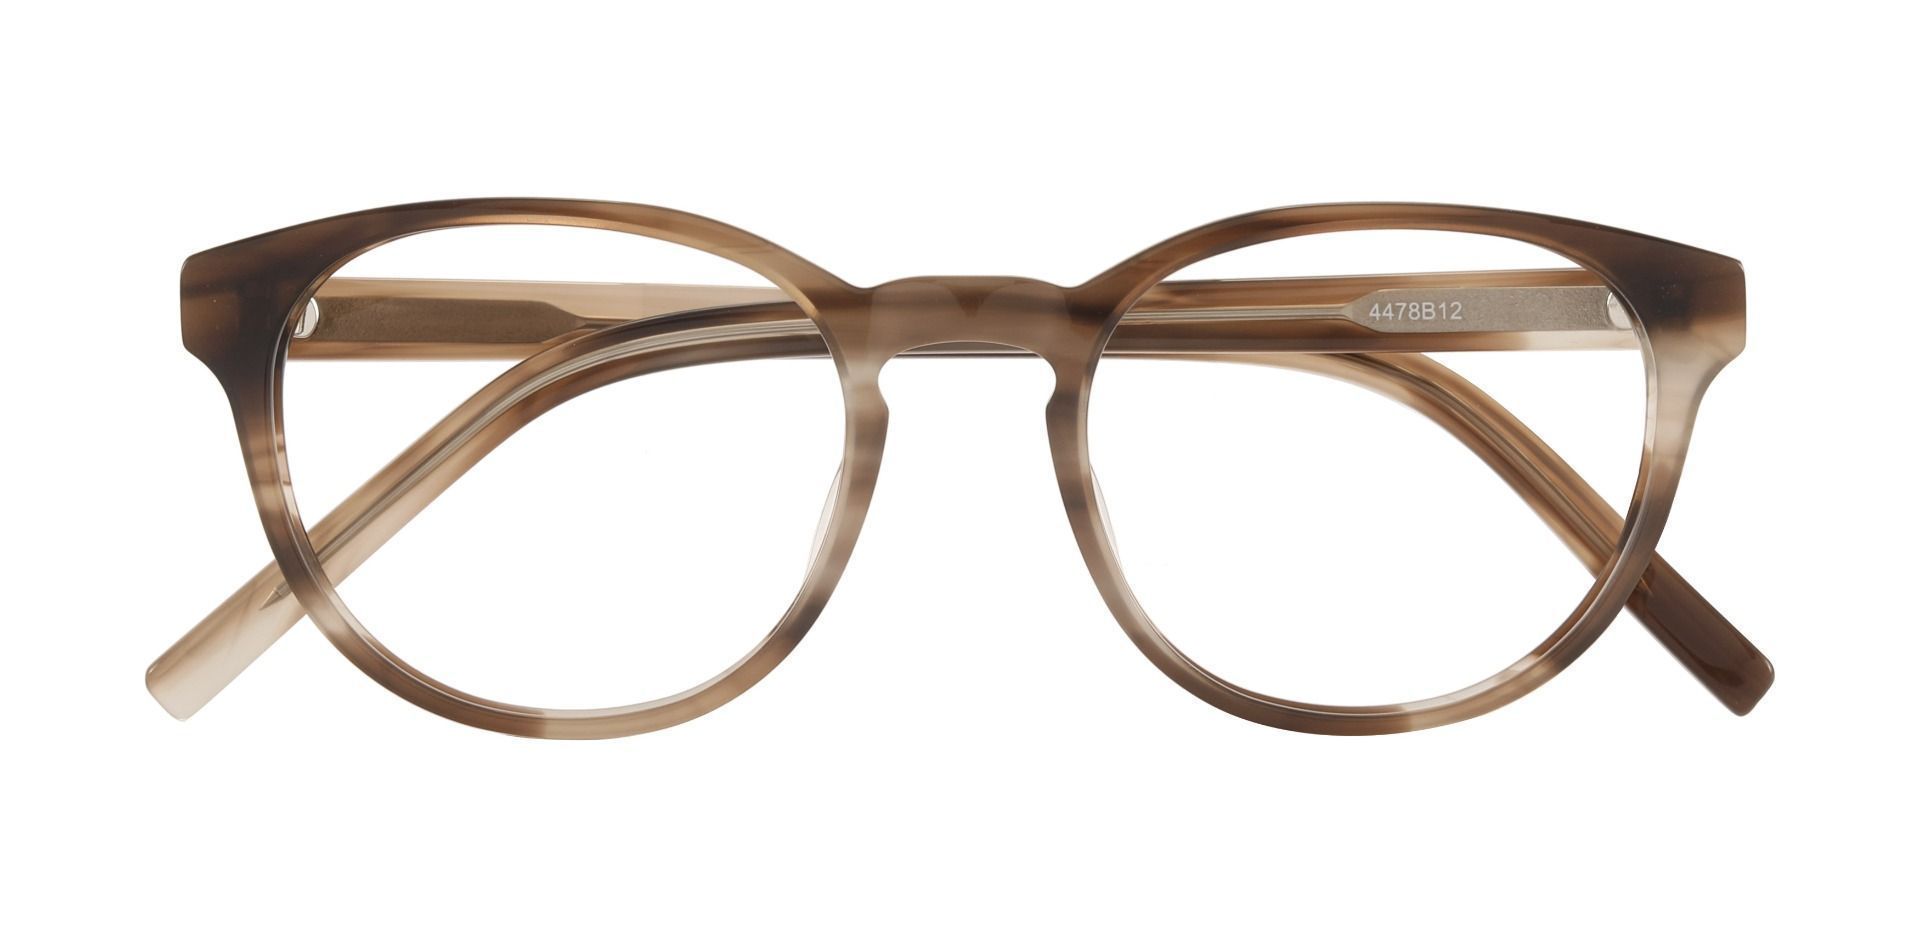 Wayland Oval Prescription Glasses - Brown